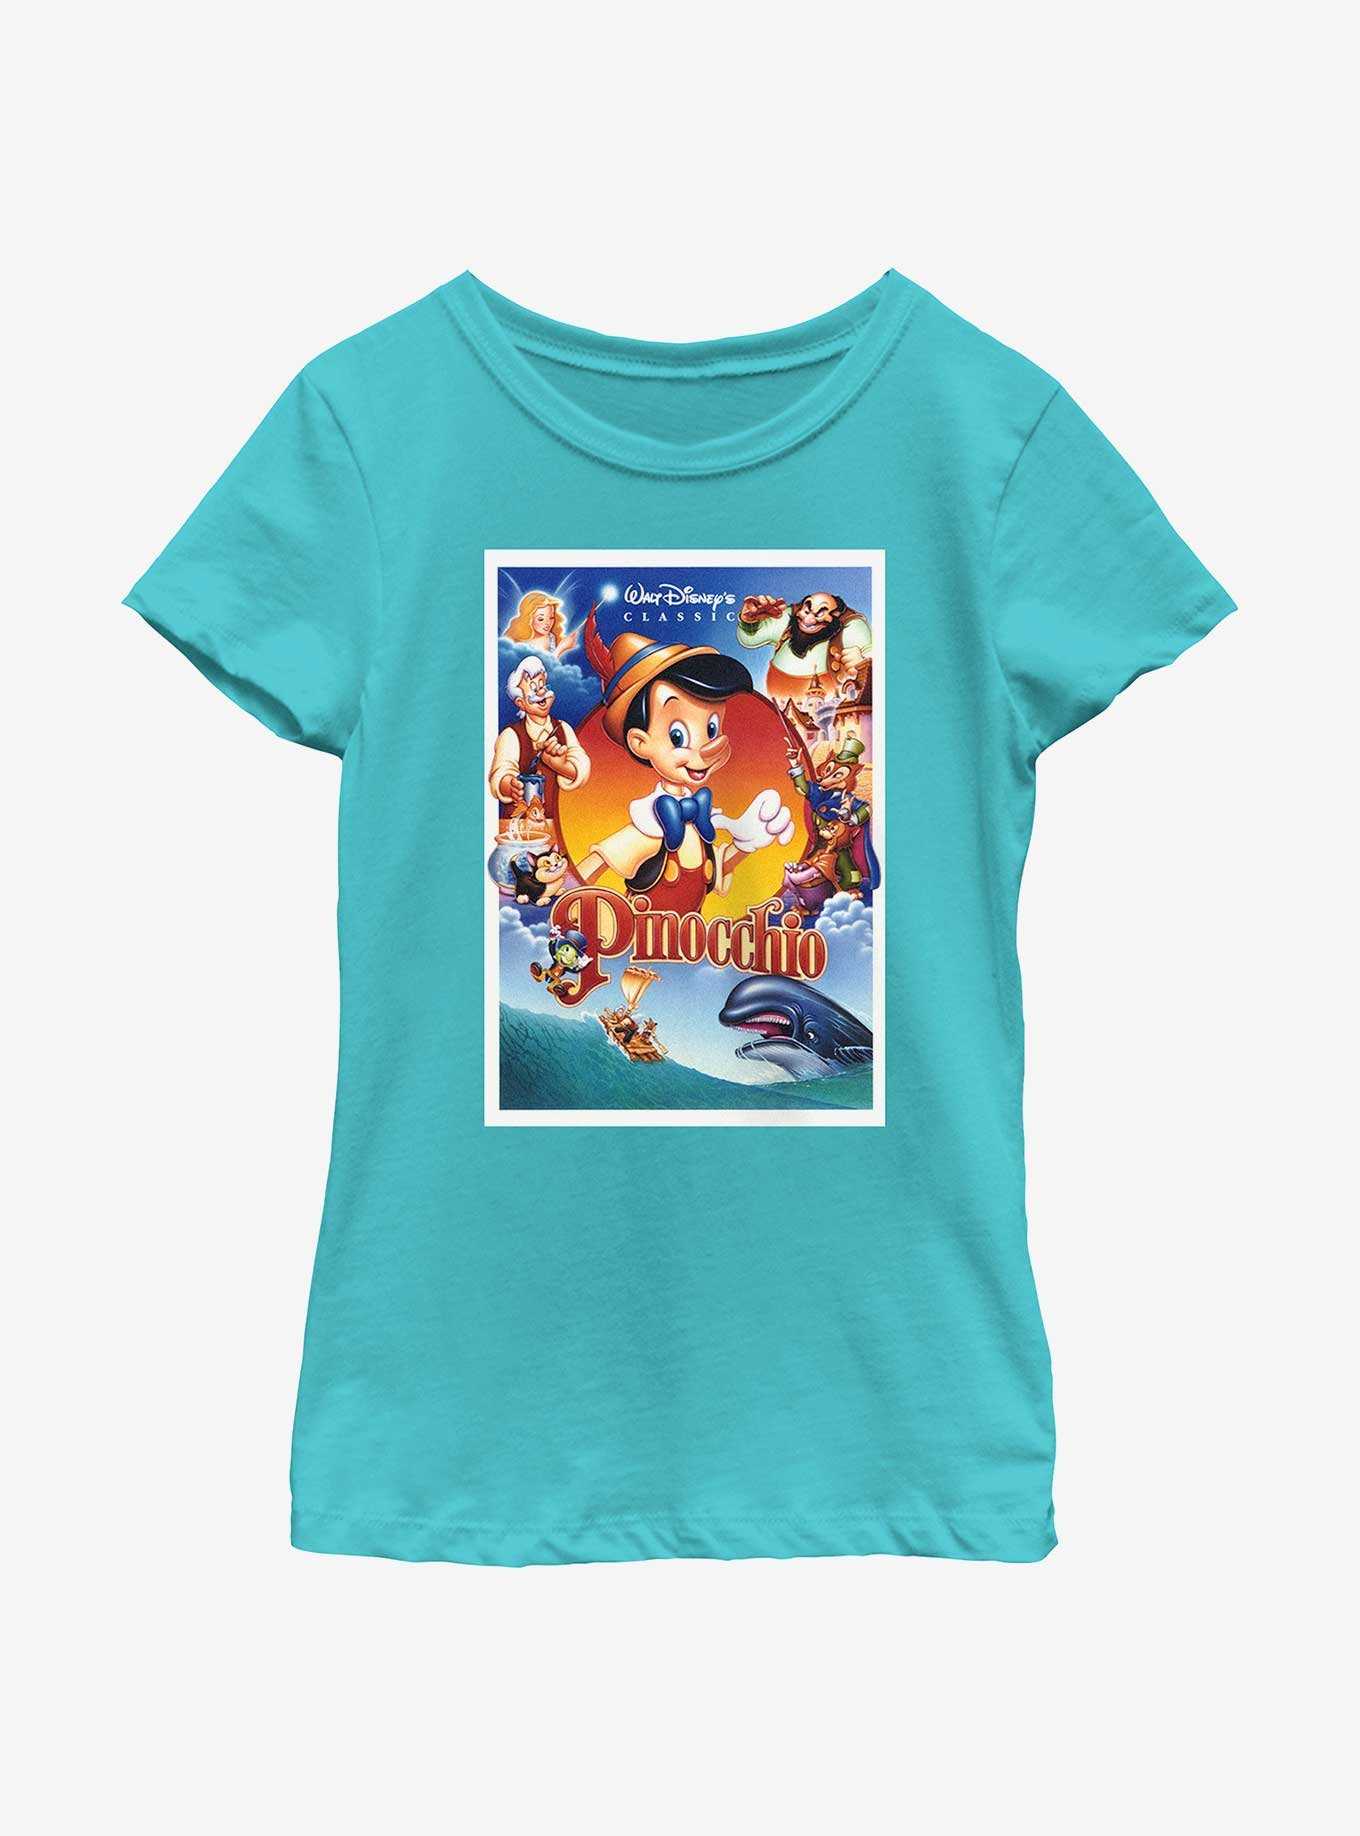 Disney Pinocchio Classic Movie Poster Youth Girls T-Shirt, , hi-res